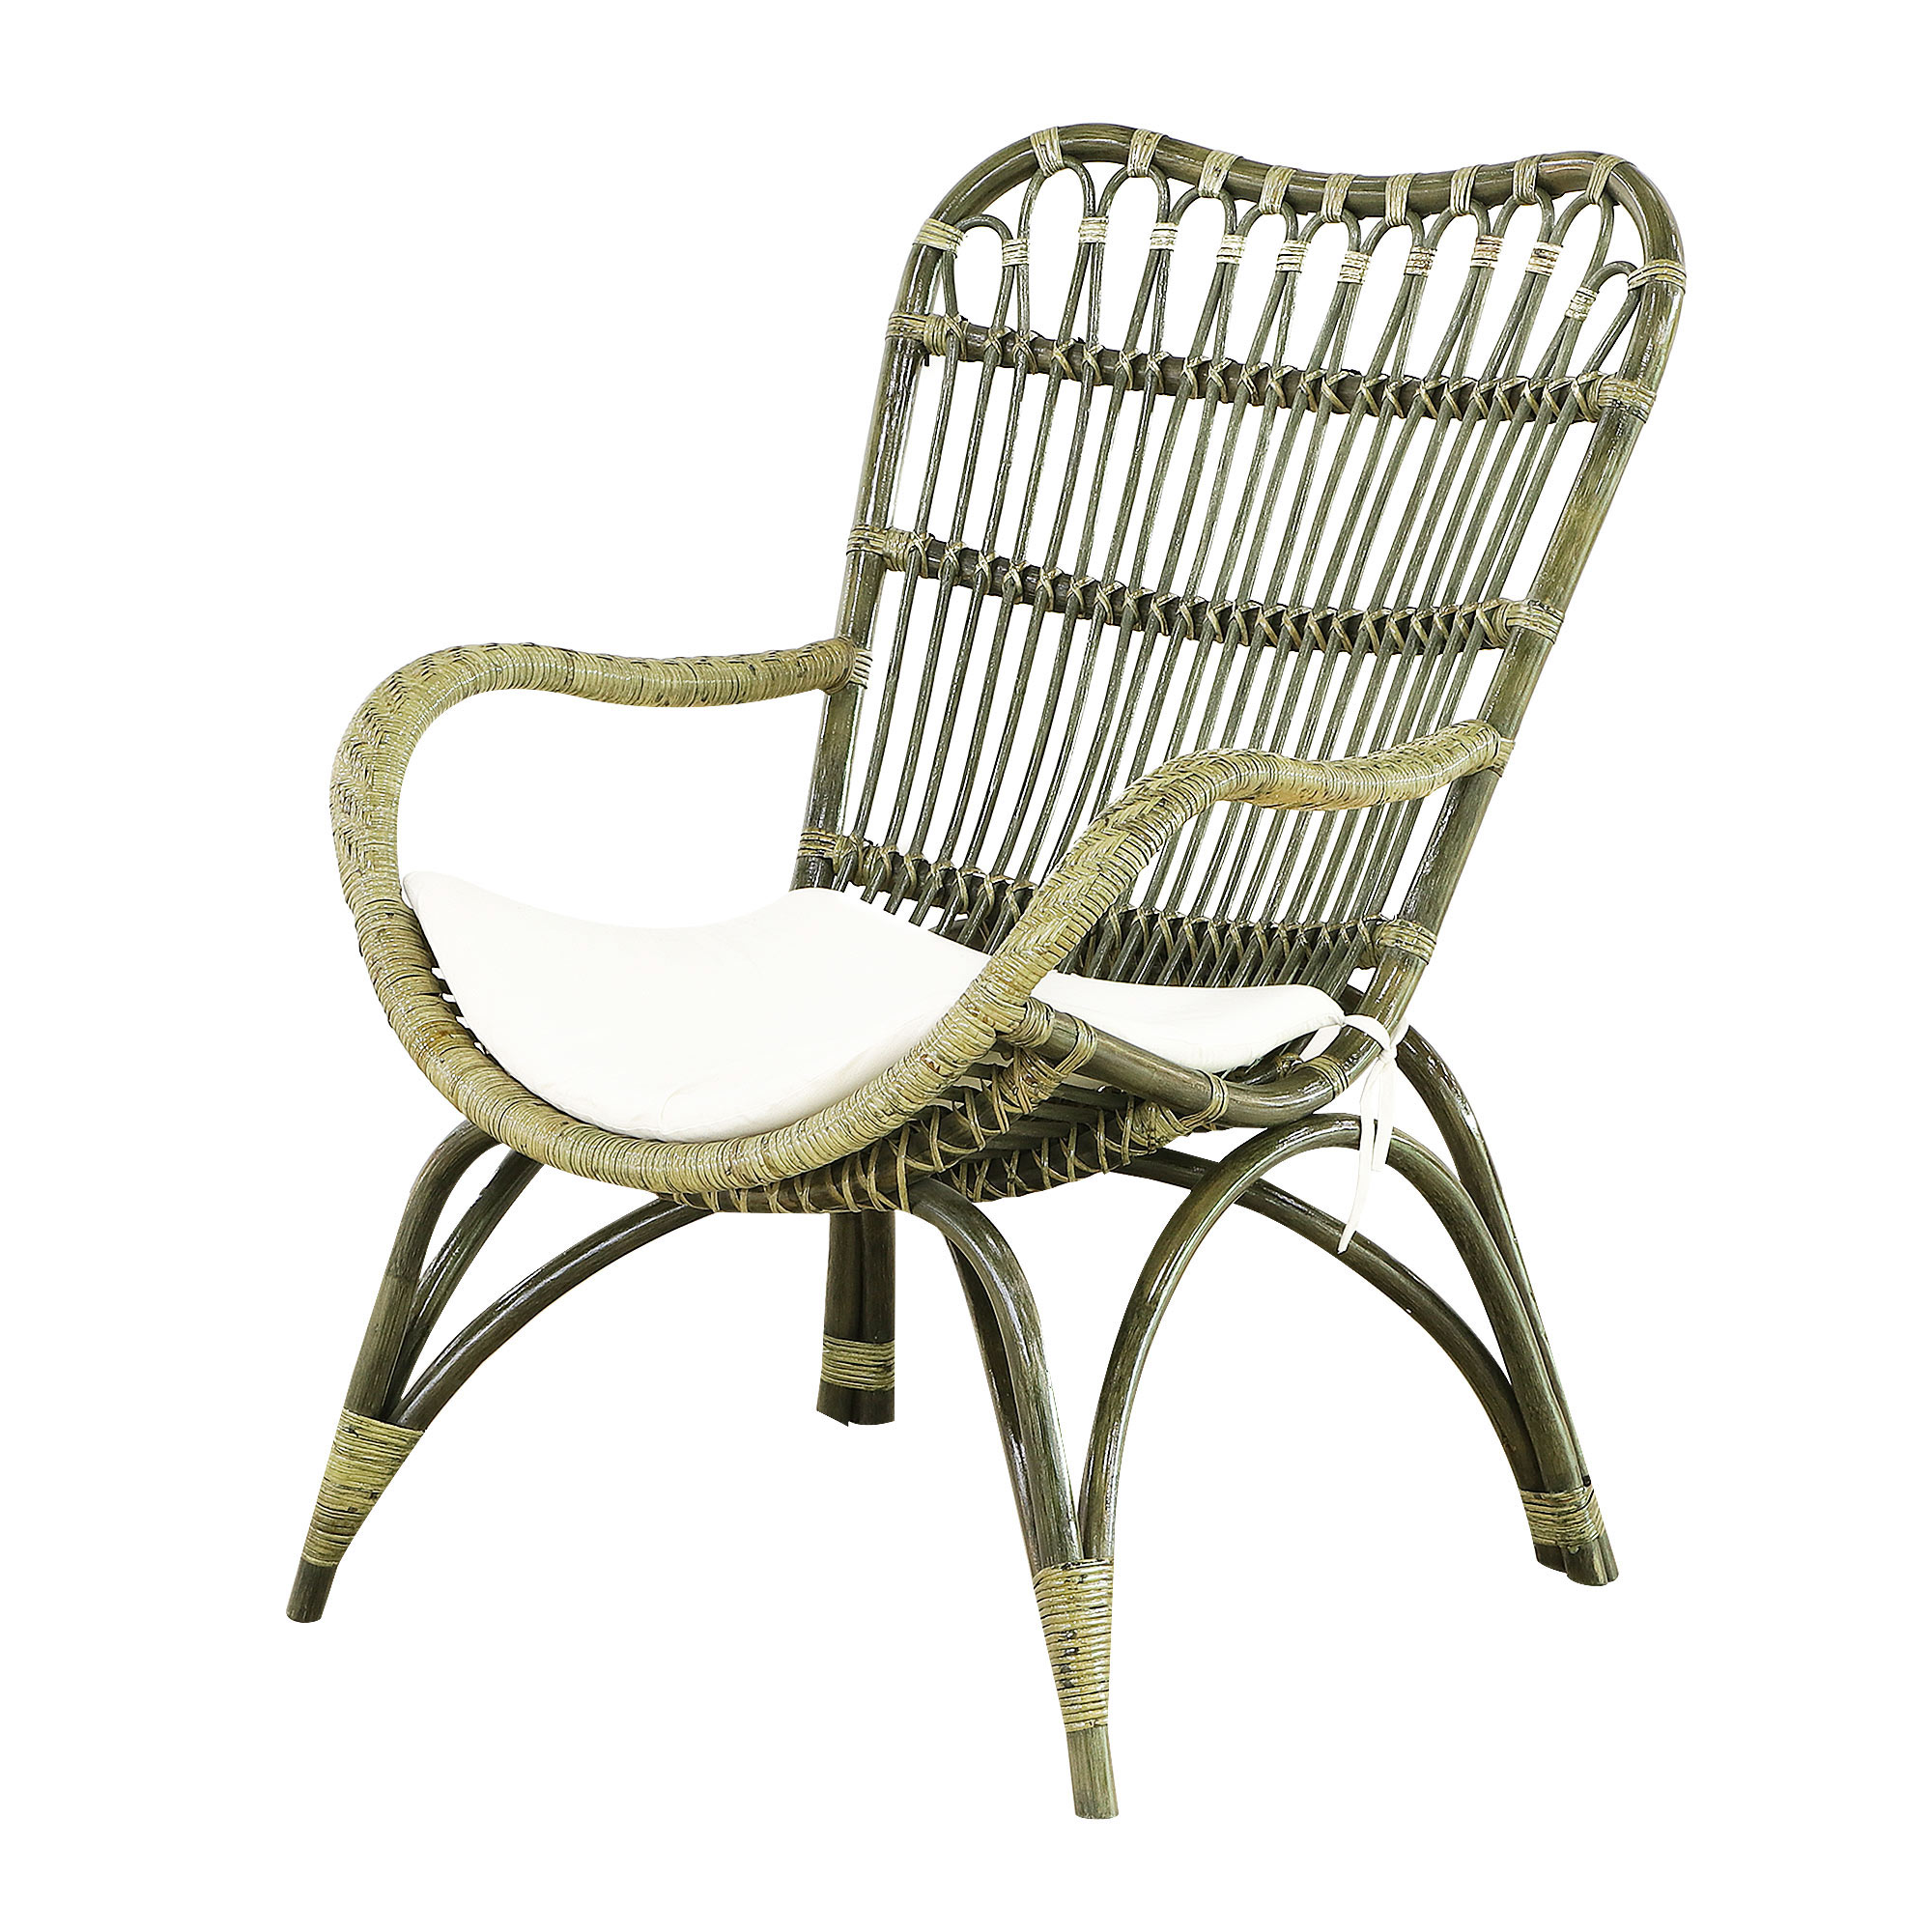 Комплект Rattan grand: кресло, оттоманка lounge olive, цвет оливковый - фото 2